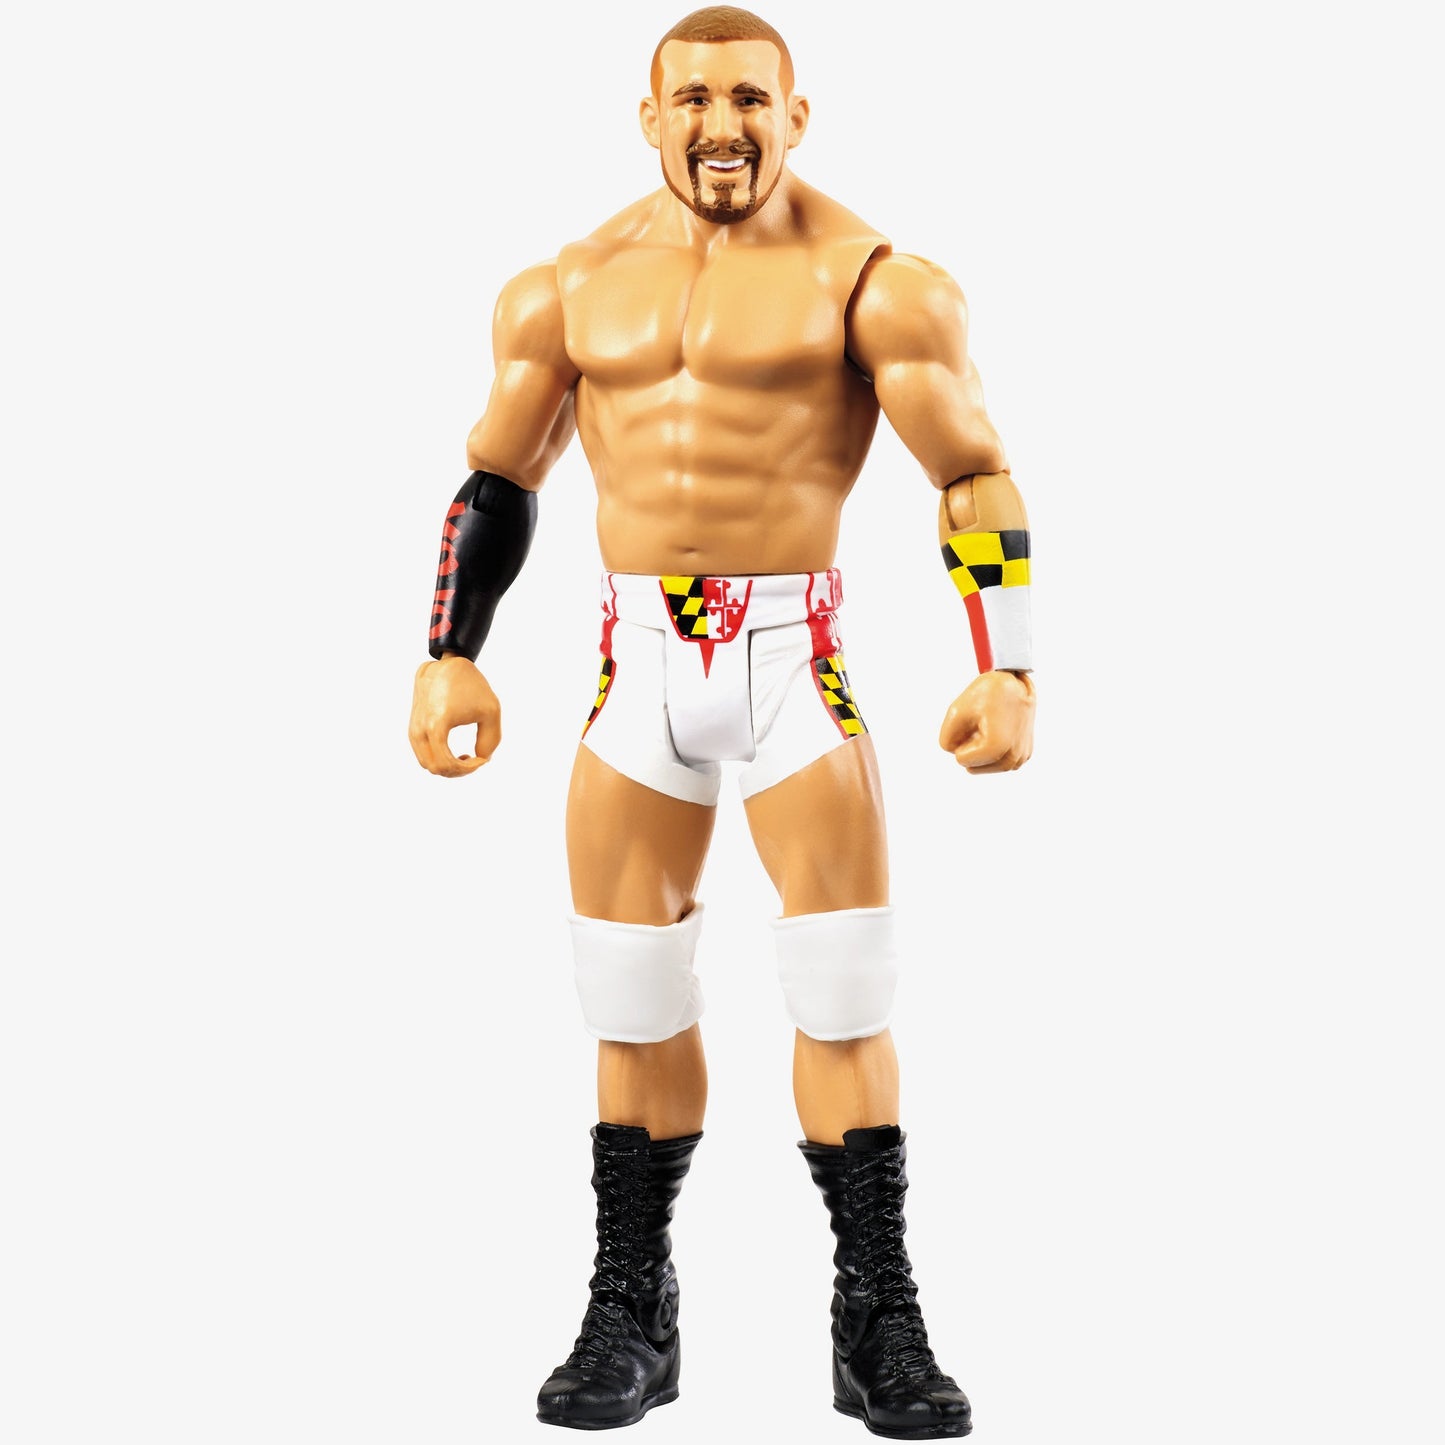 Mojo Rawley - WWE WrestleMania 34 Basic Series